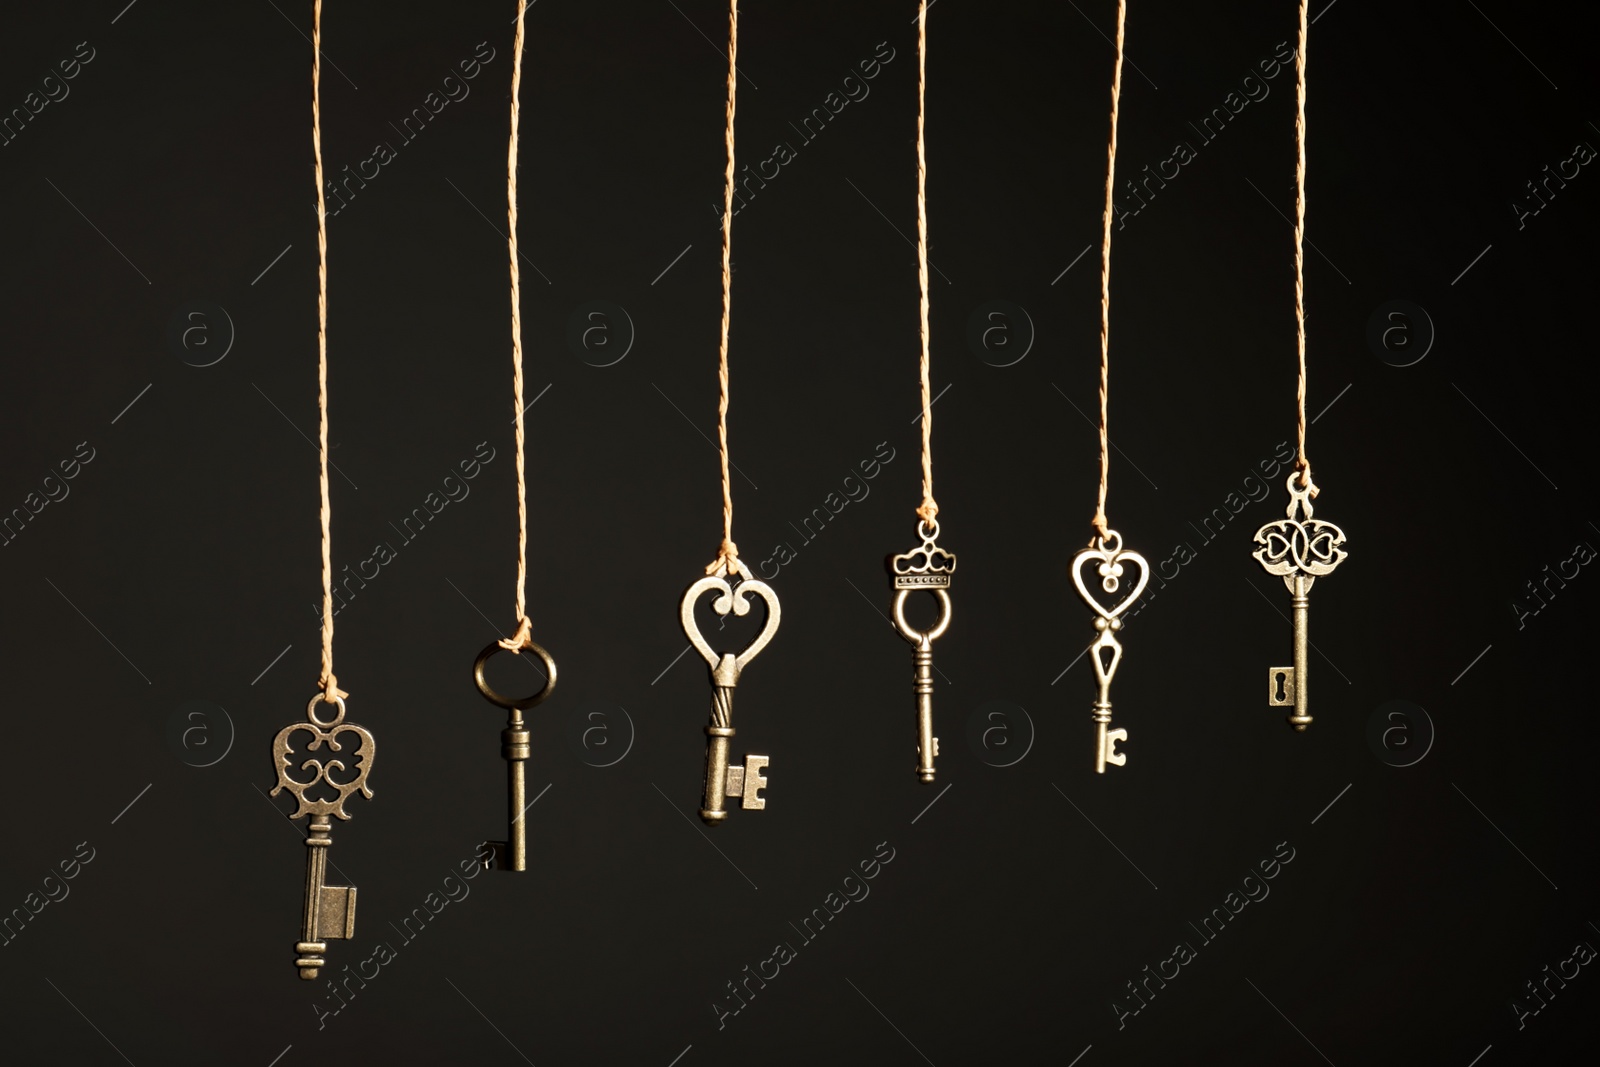 Photo of Bronze vintage ornate keys hanging on threads against dark background